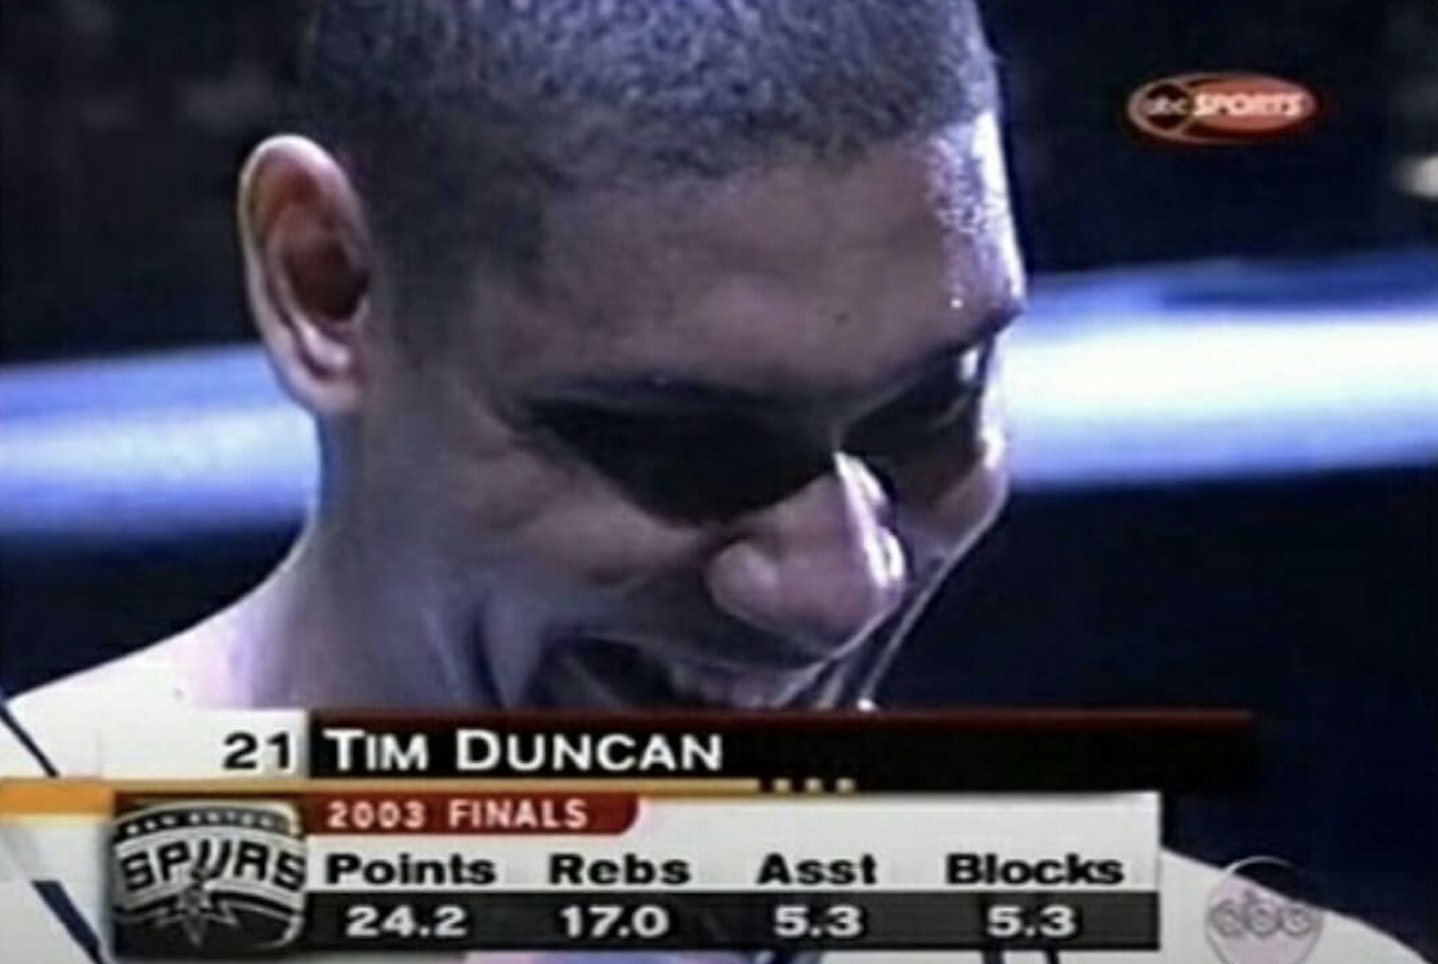 NBA Memes on X: The Classic Tim Duncan face.  / X